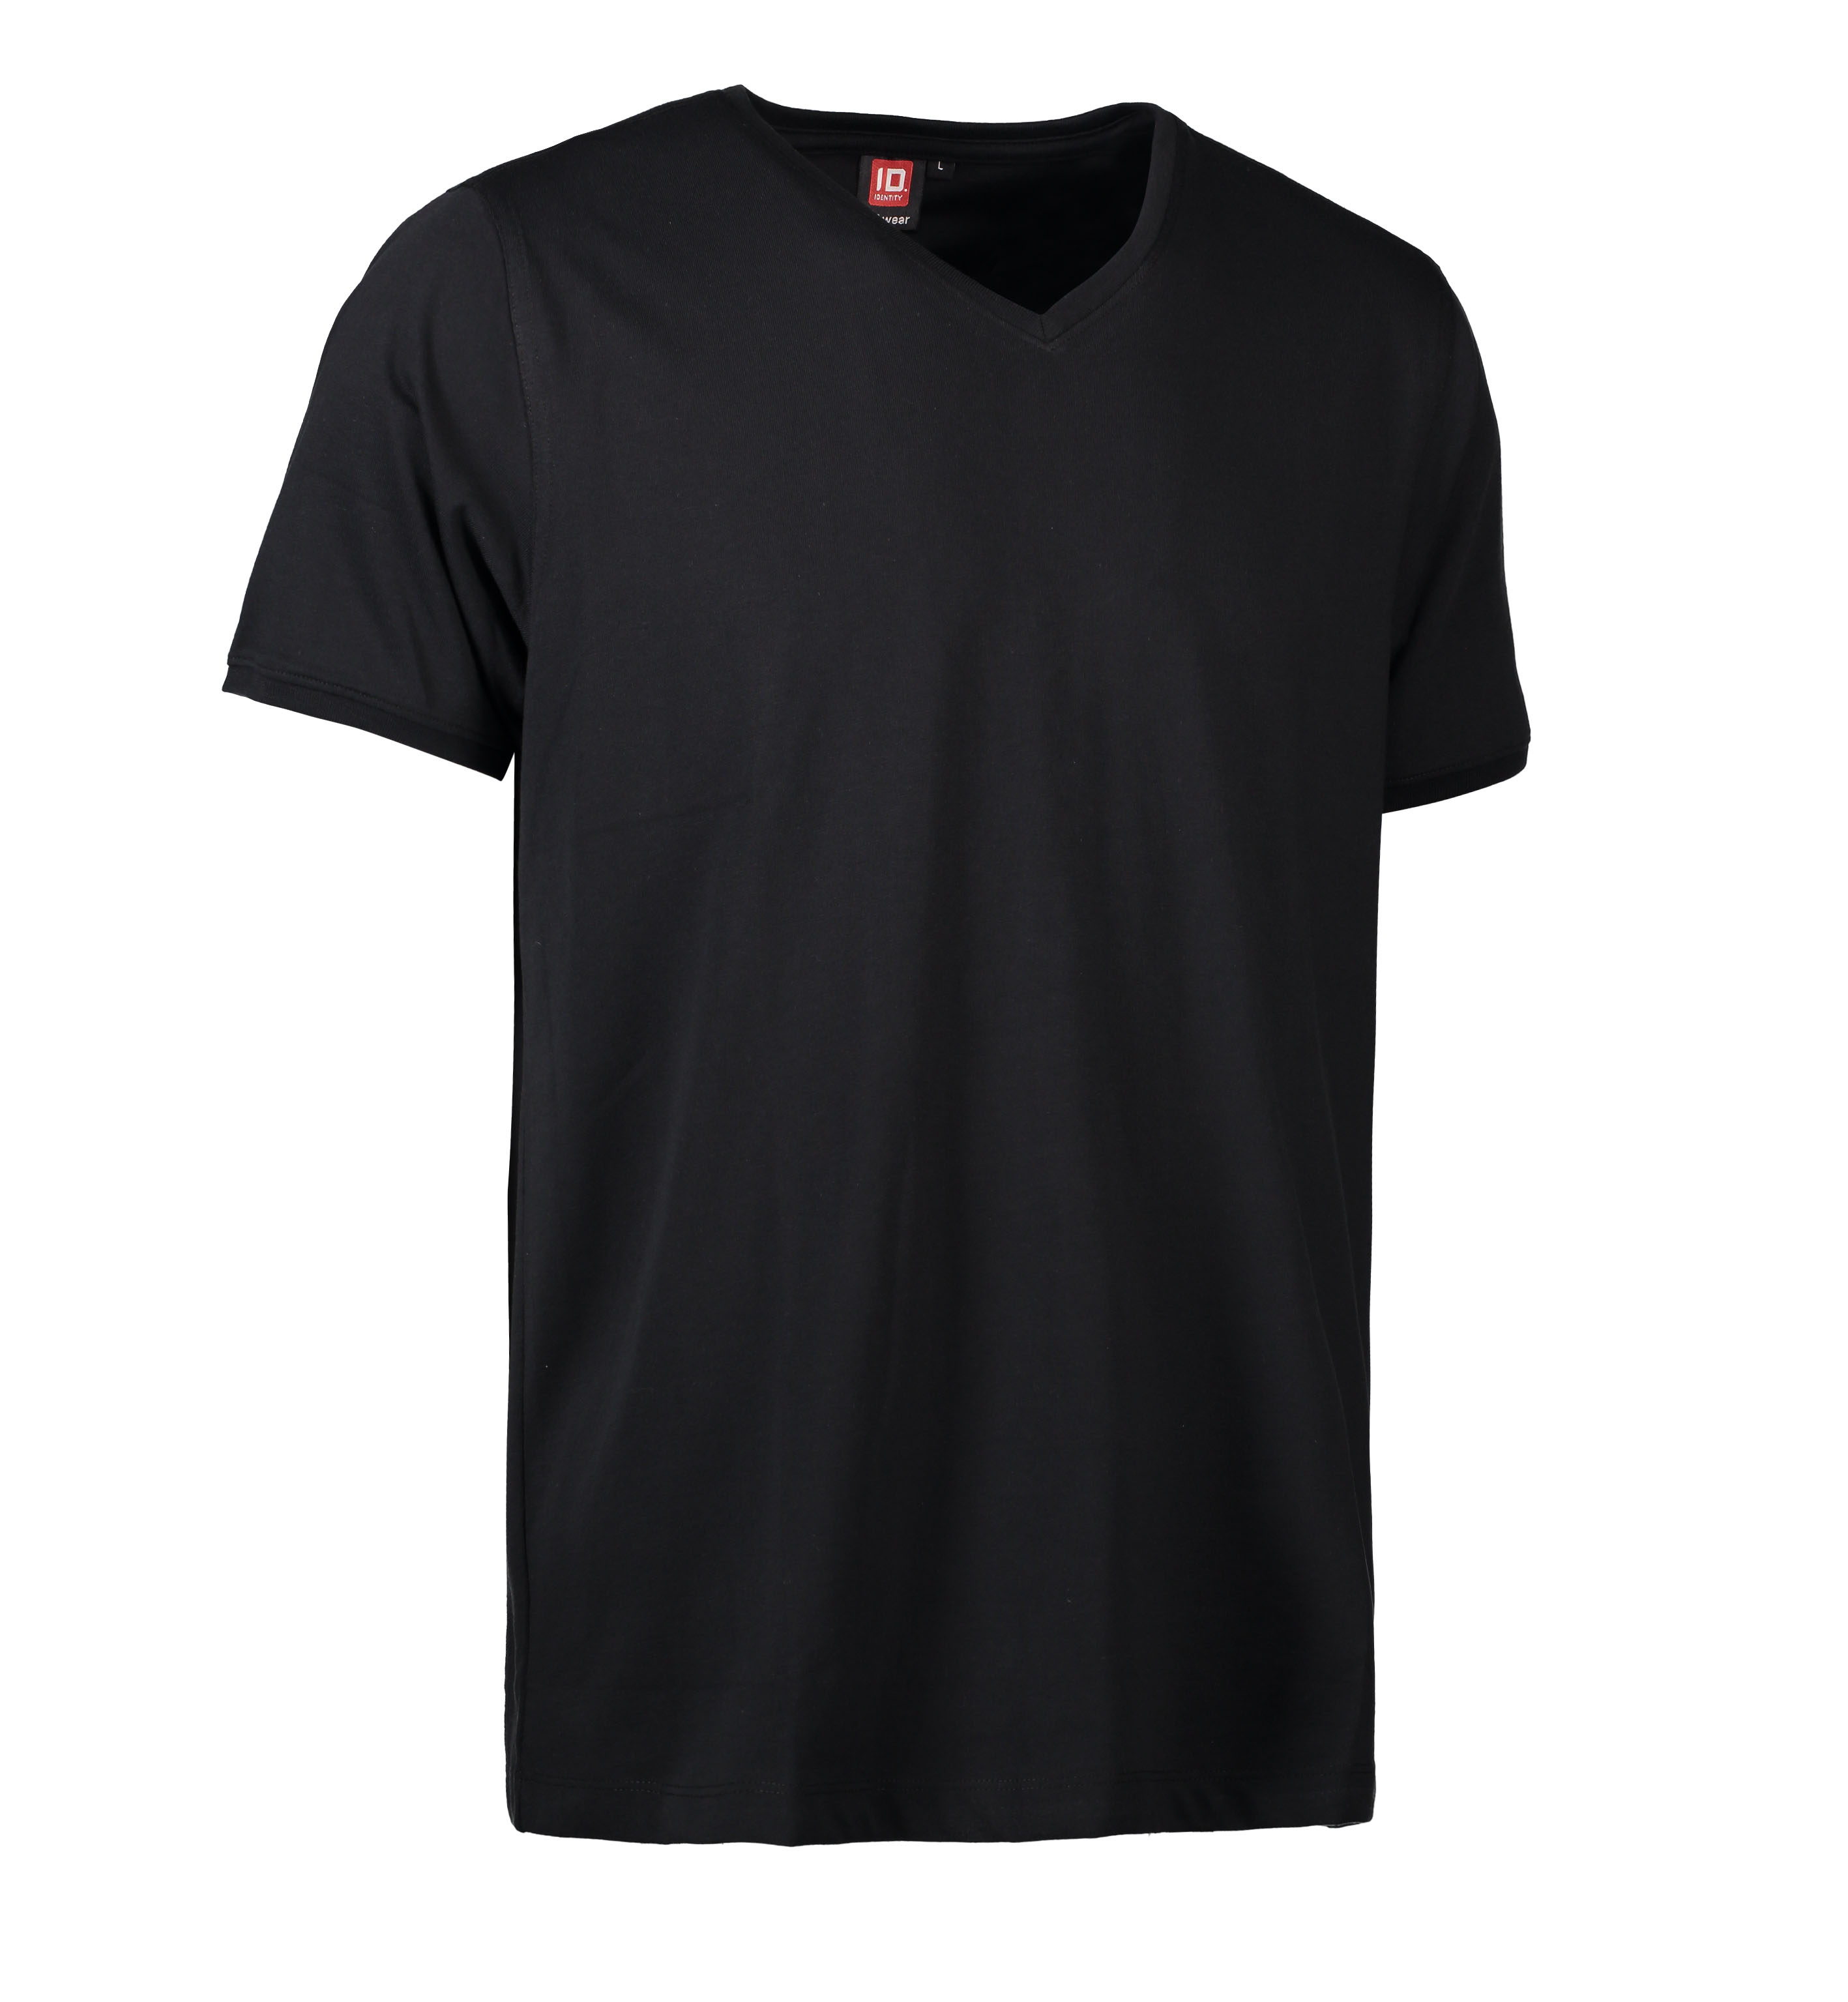 Wear V-Ausschnitt | T-Shirt T-Shirts by Oberbekleidung Sylke Besticken | CARE Arbeitsbekleidung Gauder | | PRO